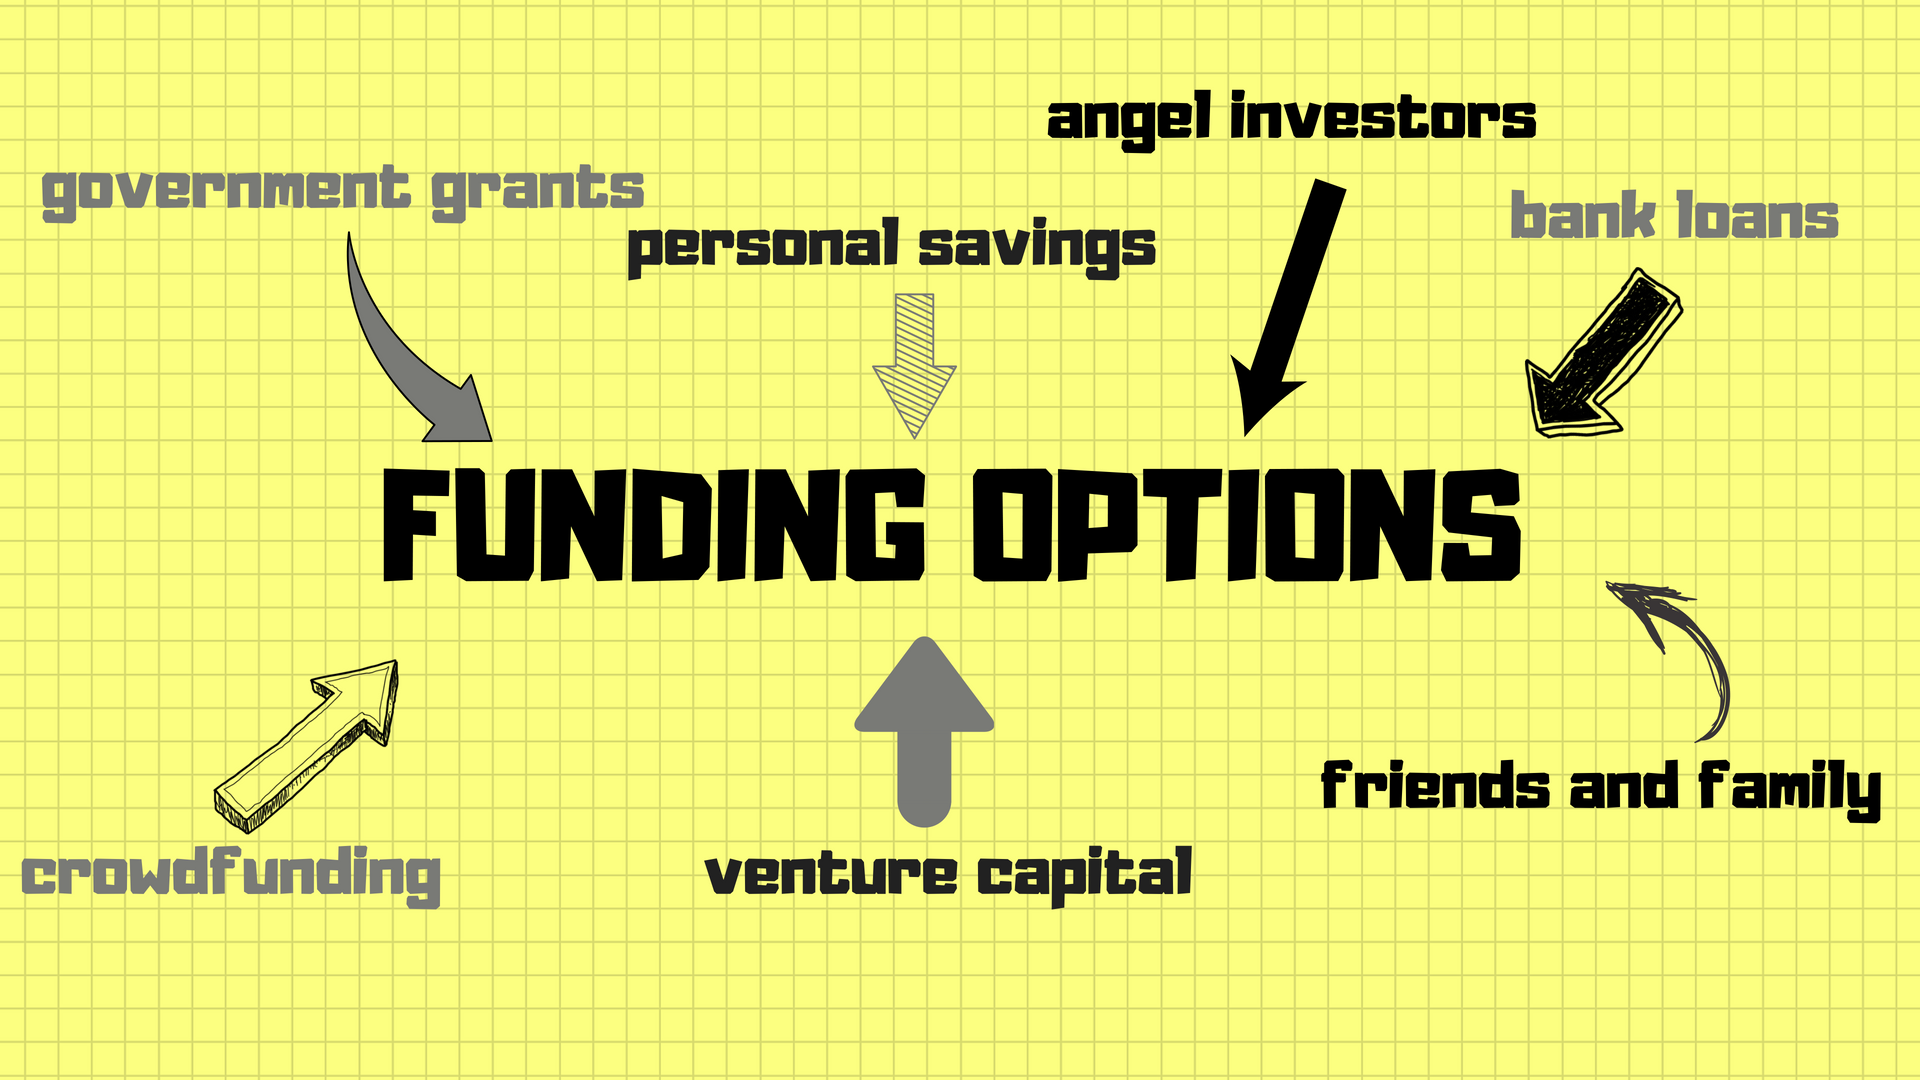 Funding options for startups